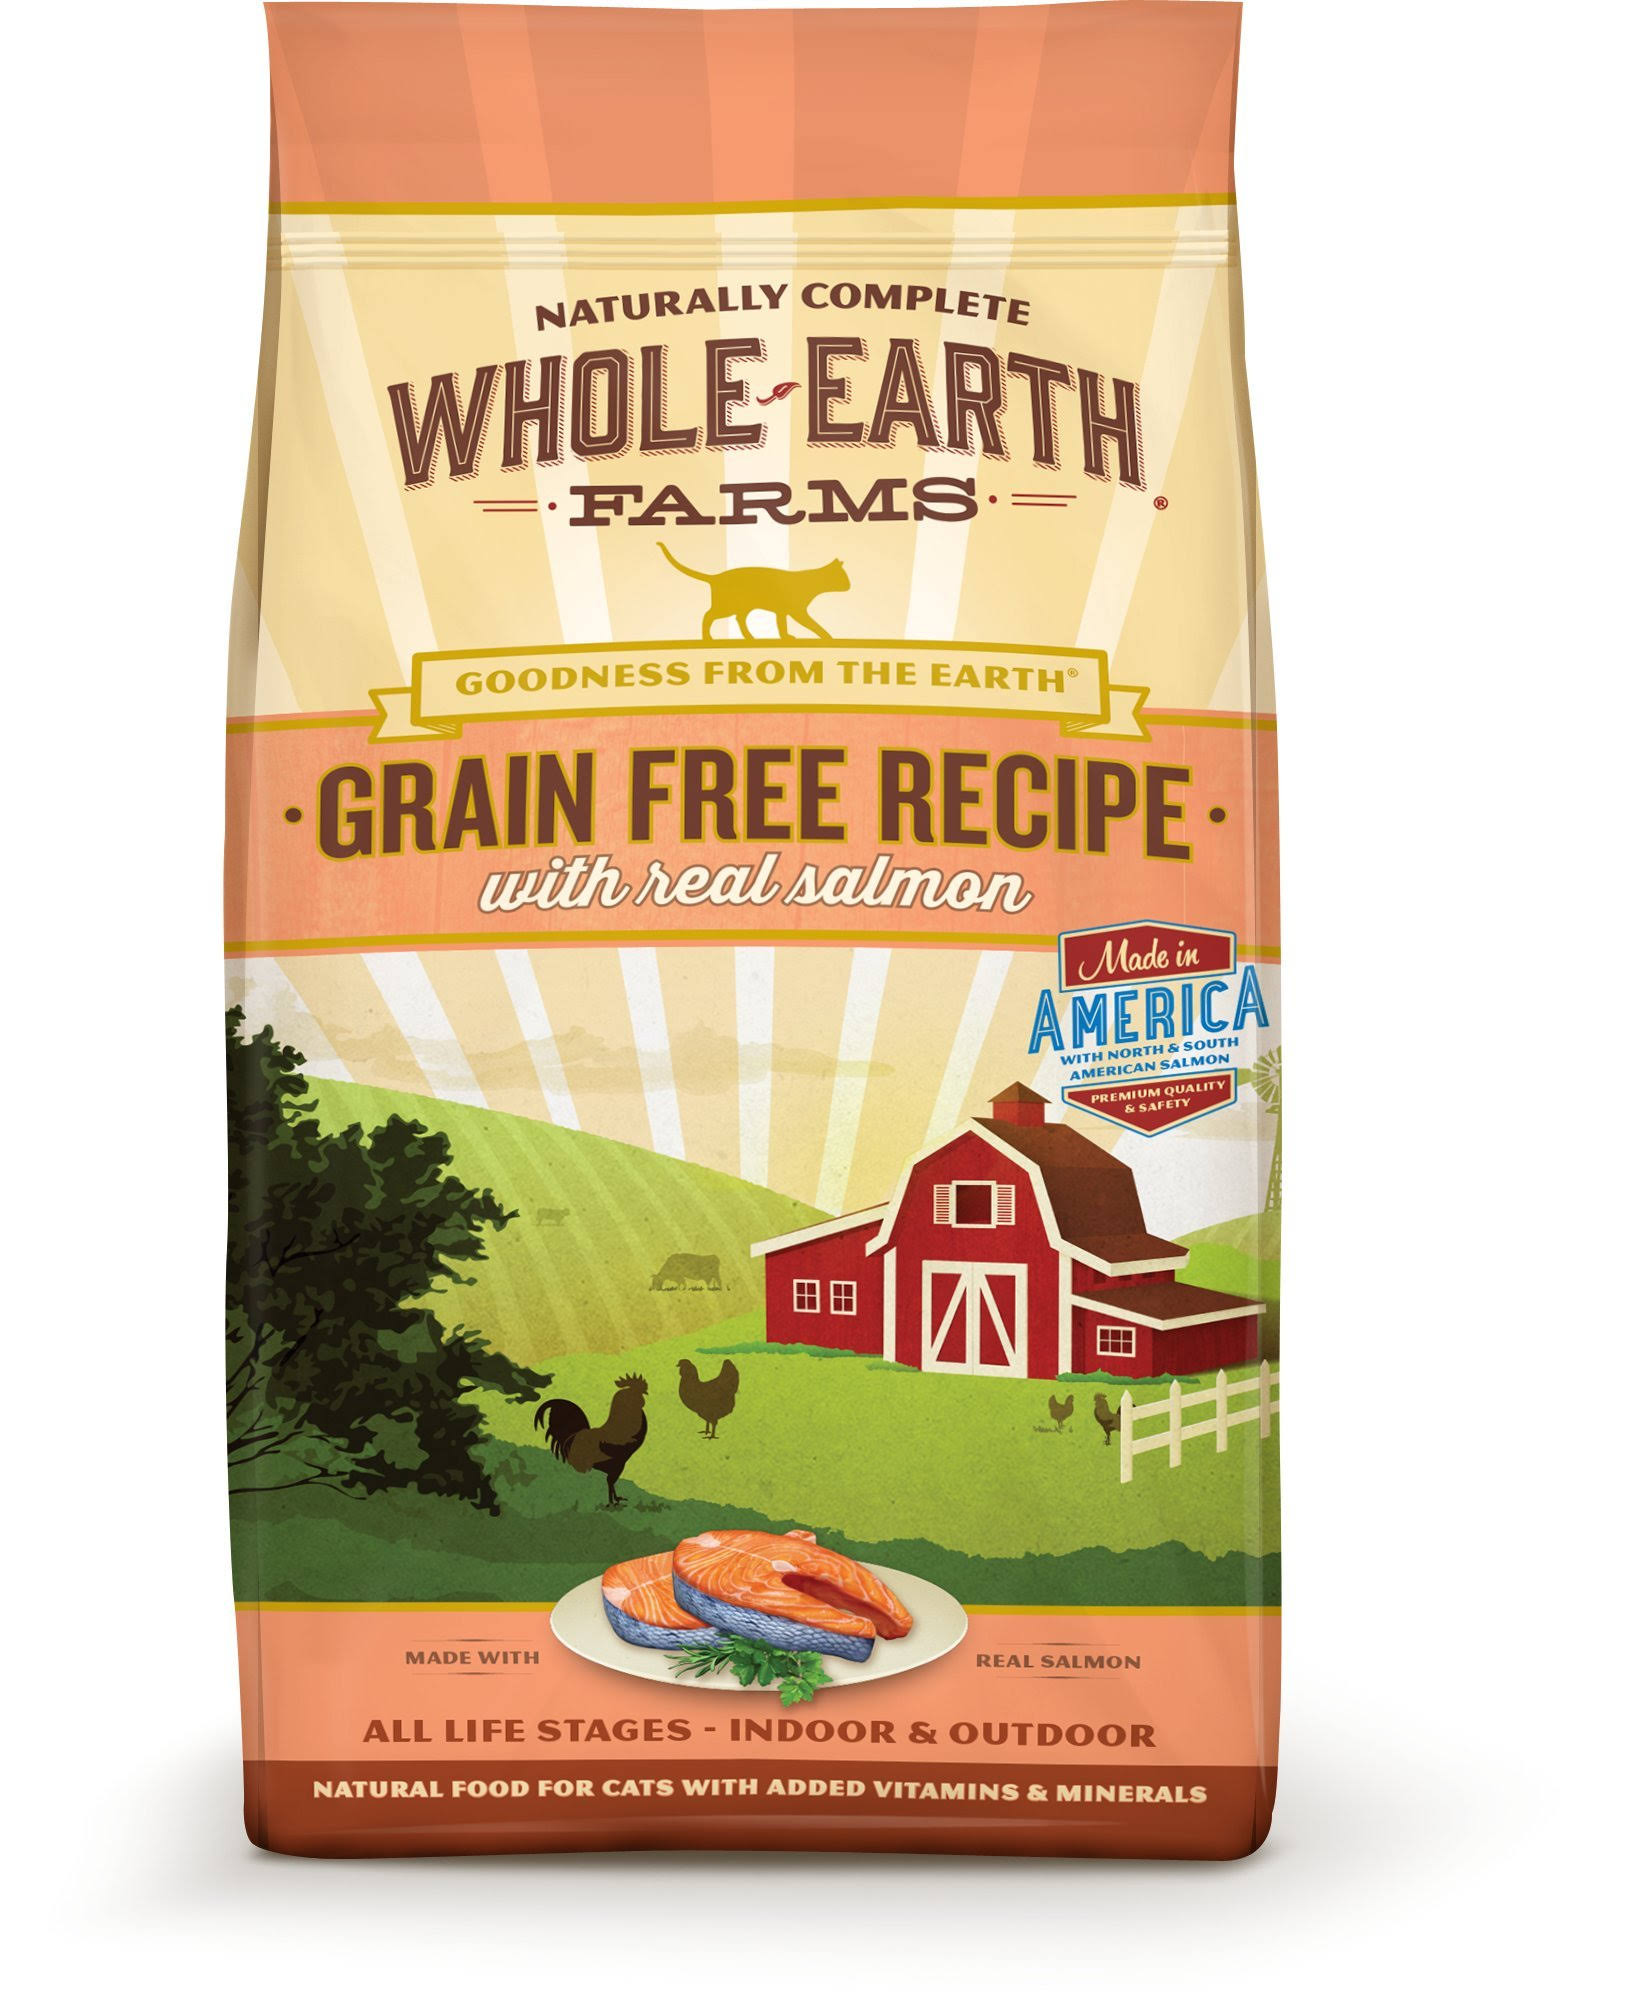 Whole Earth Farms Grain Free Recipe with Real Salmon Cat Food - 5lb